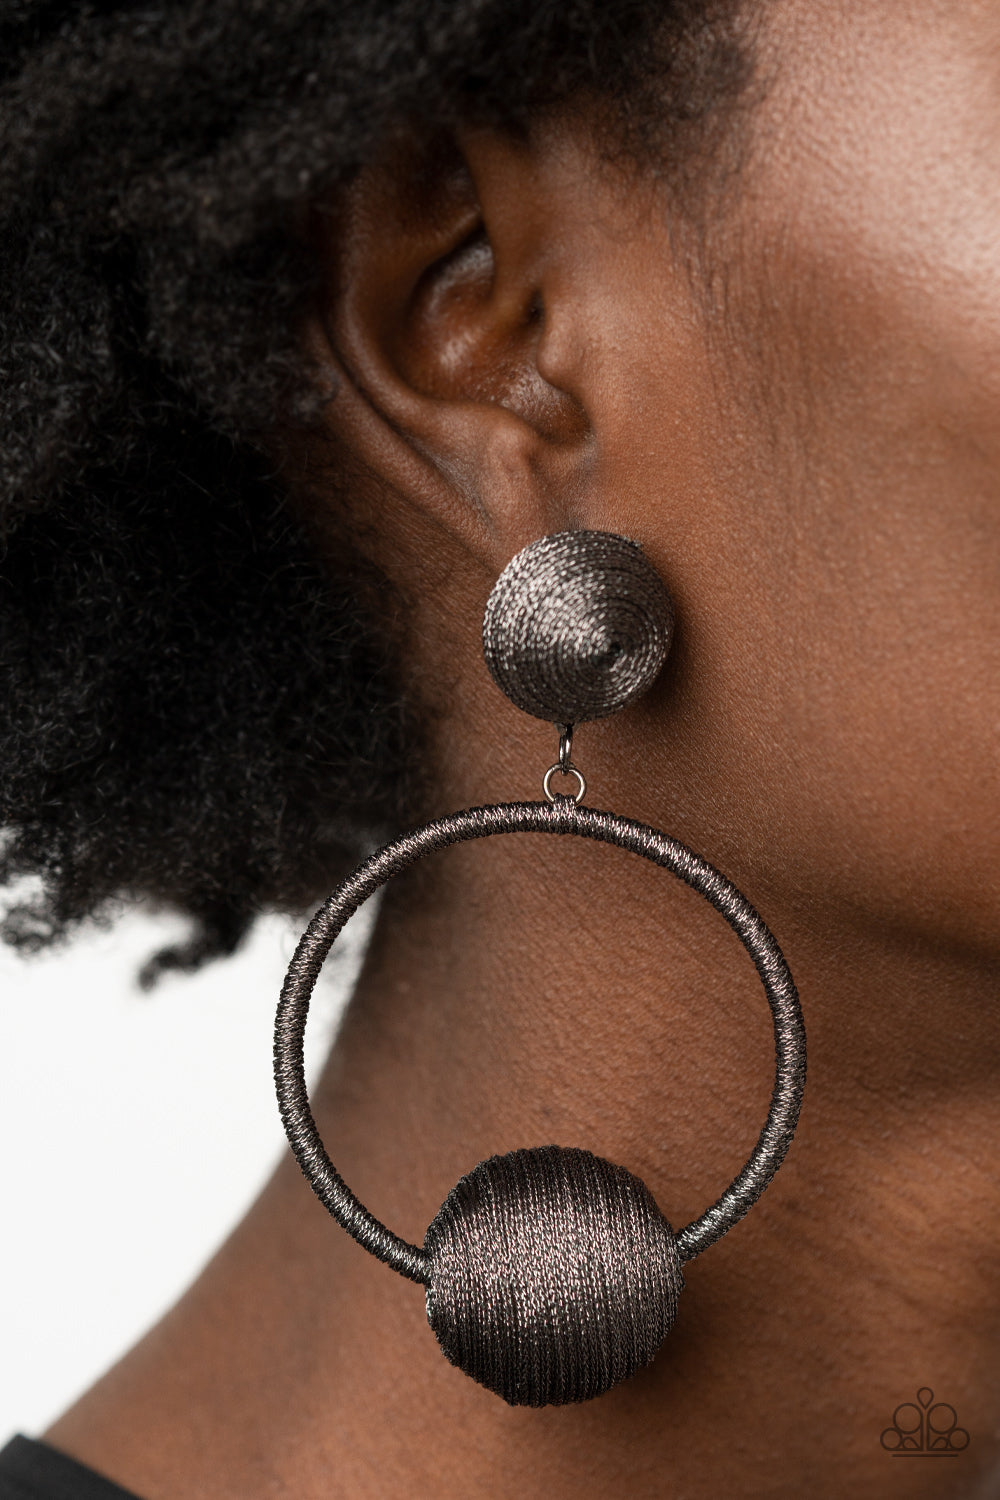 Paparazzi Accessories Social Sphere - Black Earrings 